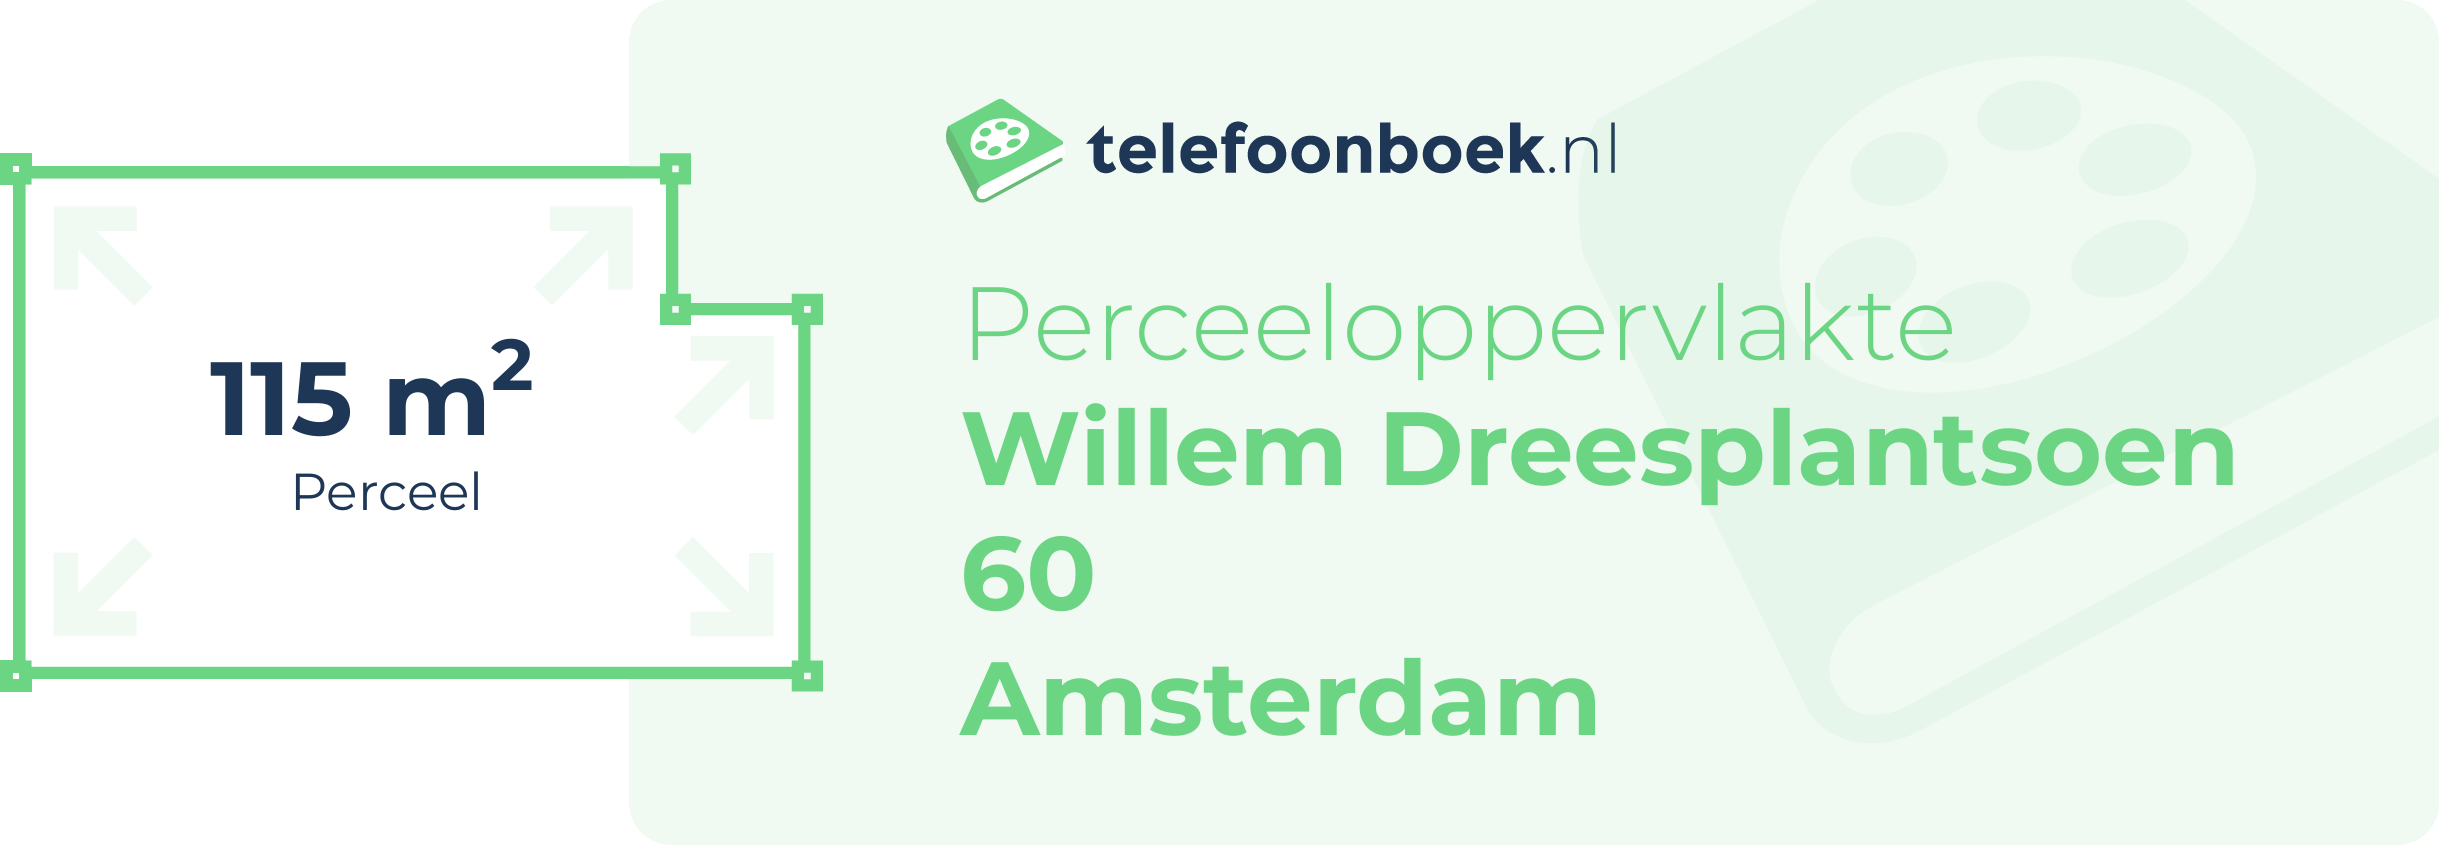 Perceeloppervlakte Willem Dreesplantsoen 60 Amsterdam